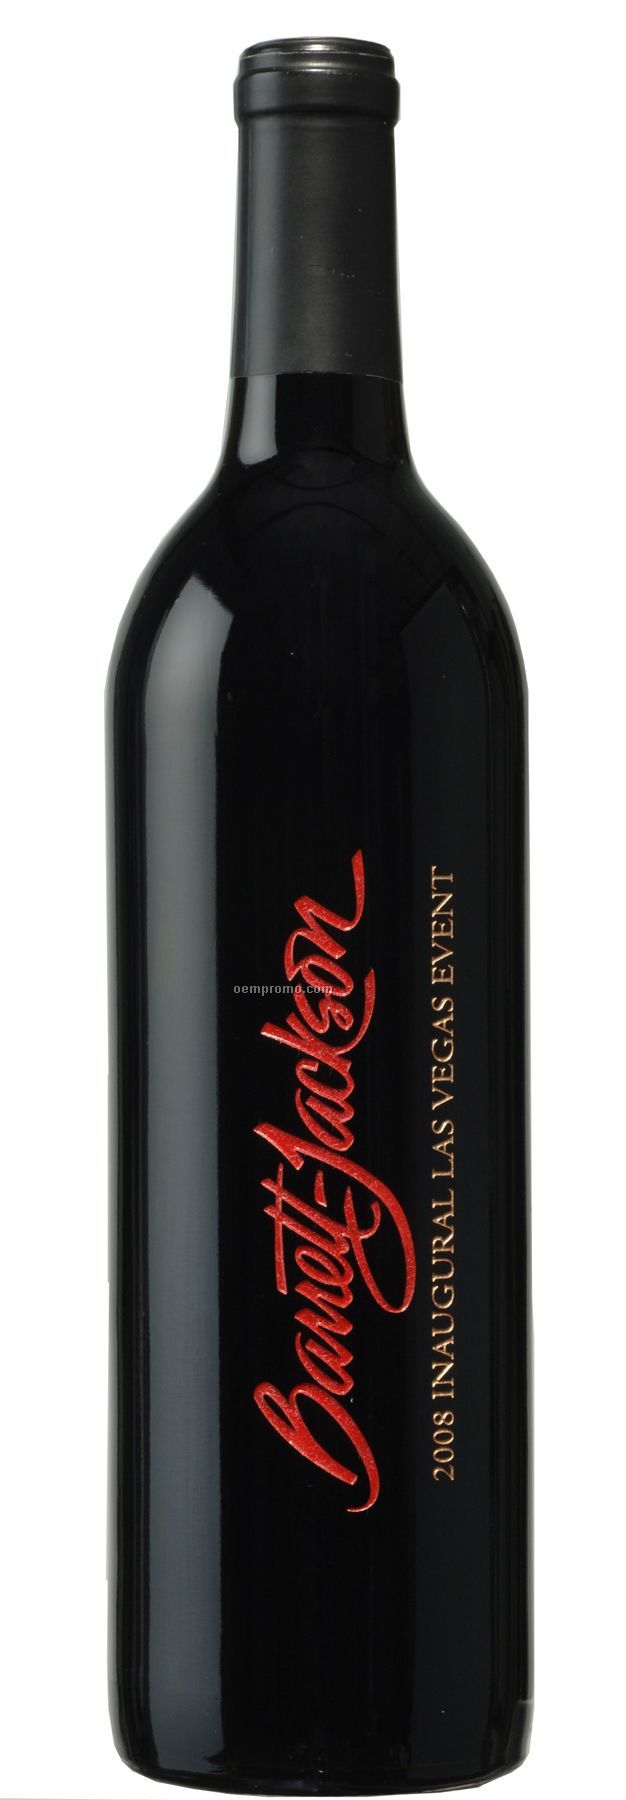 2008 Wv Zinfandel, Dry Creek Valley Platinum Series (Etched Wine)